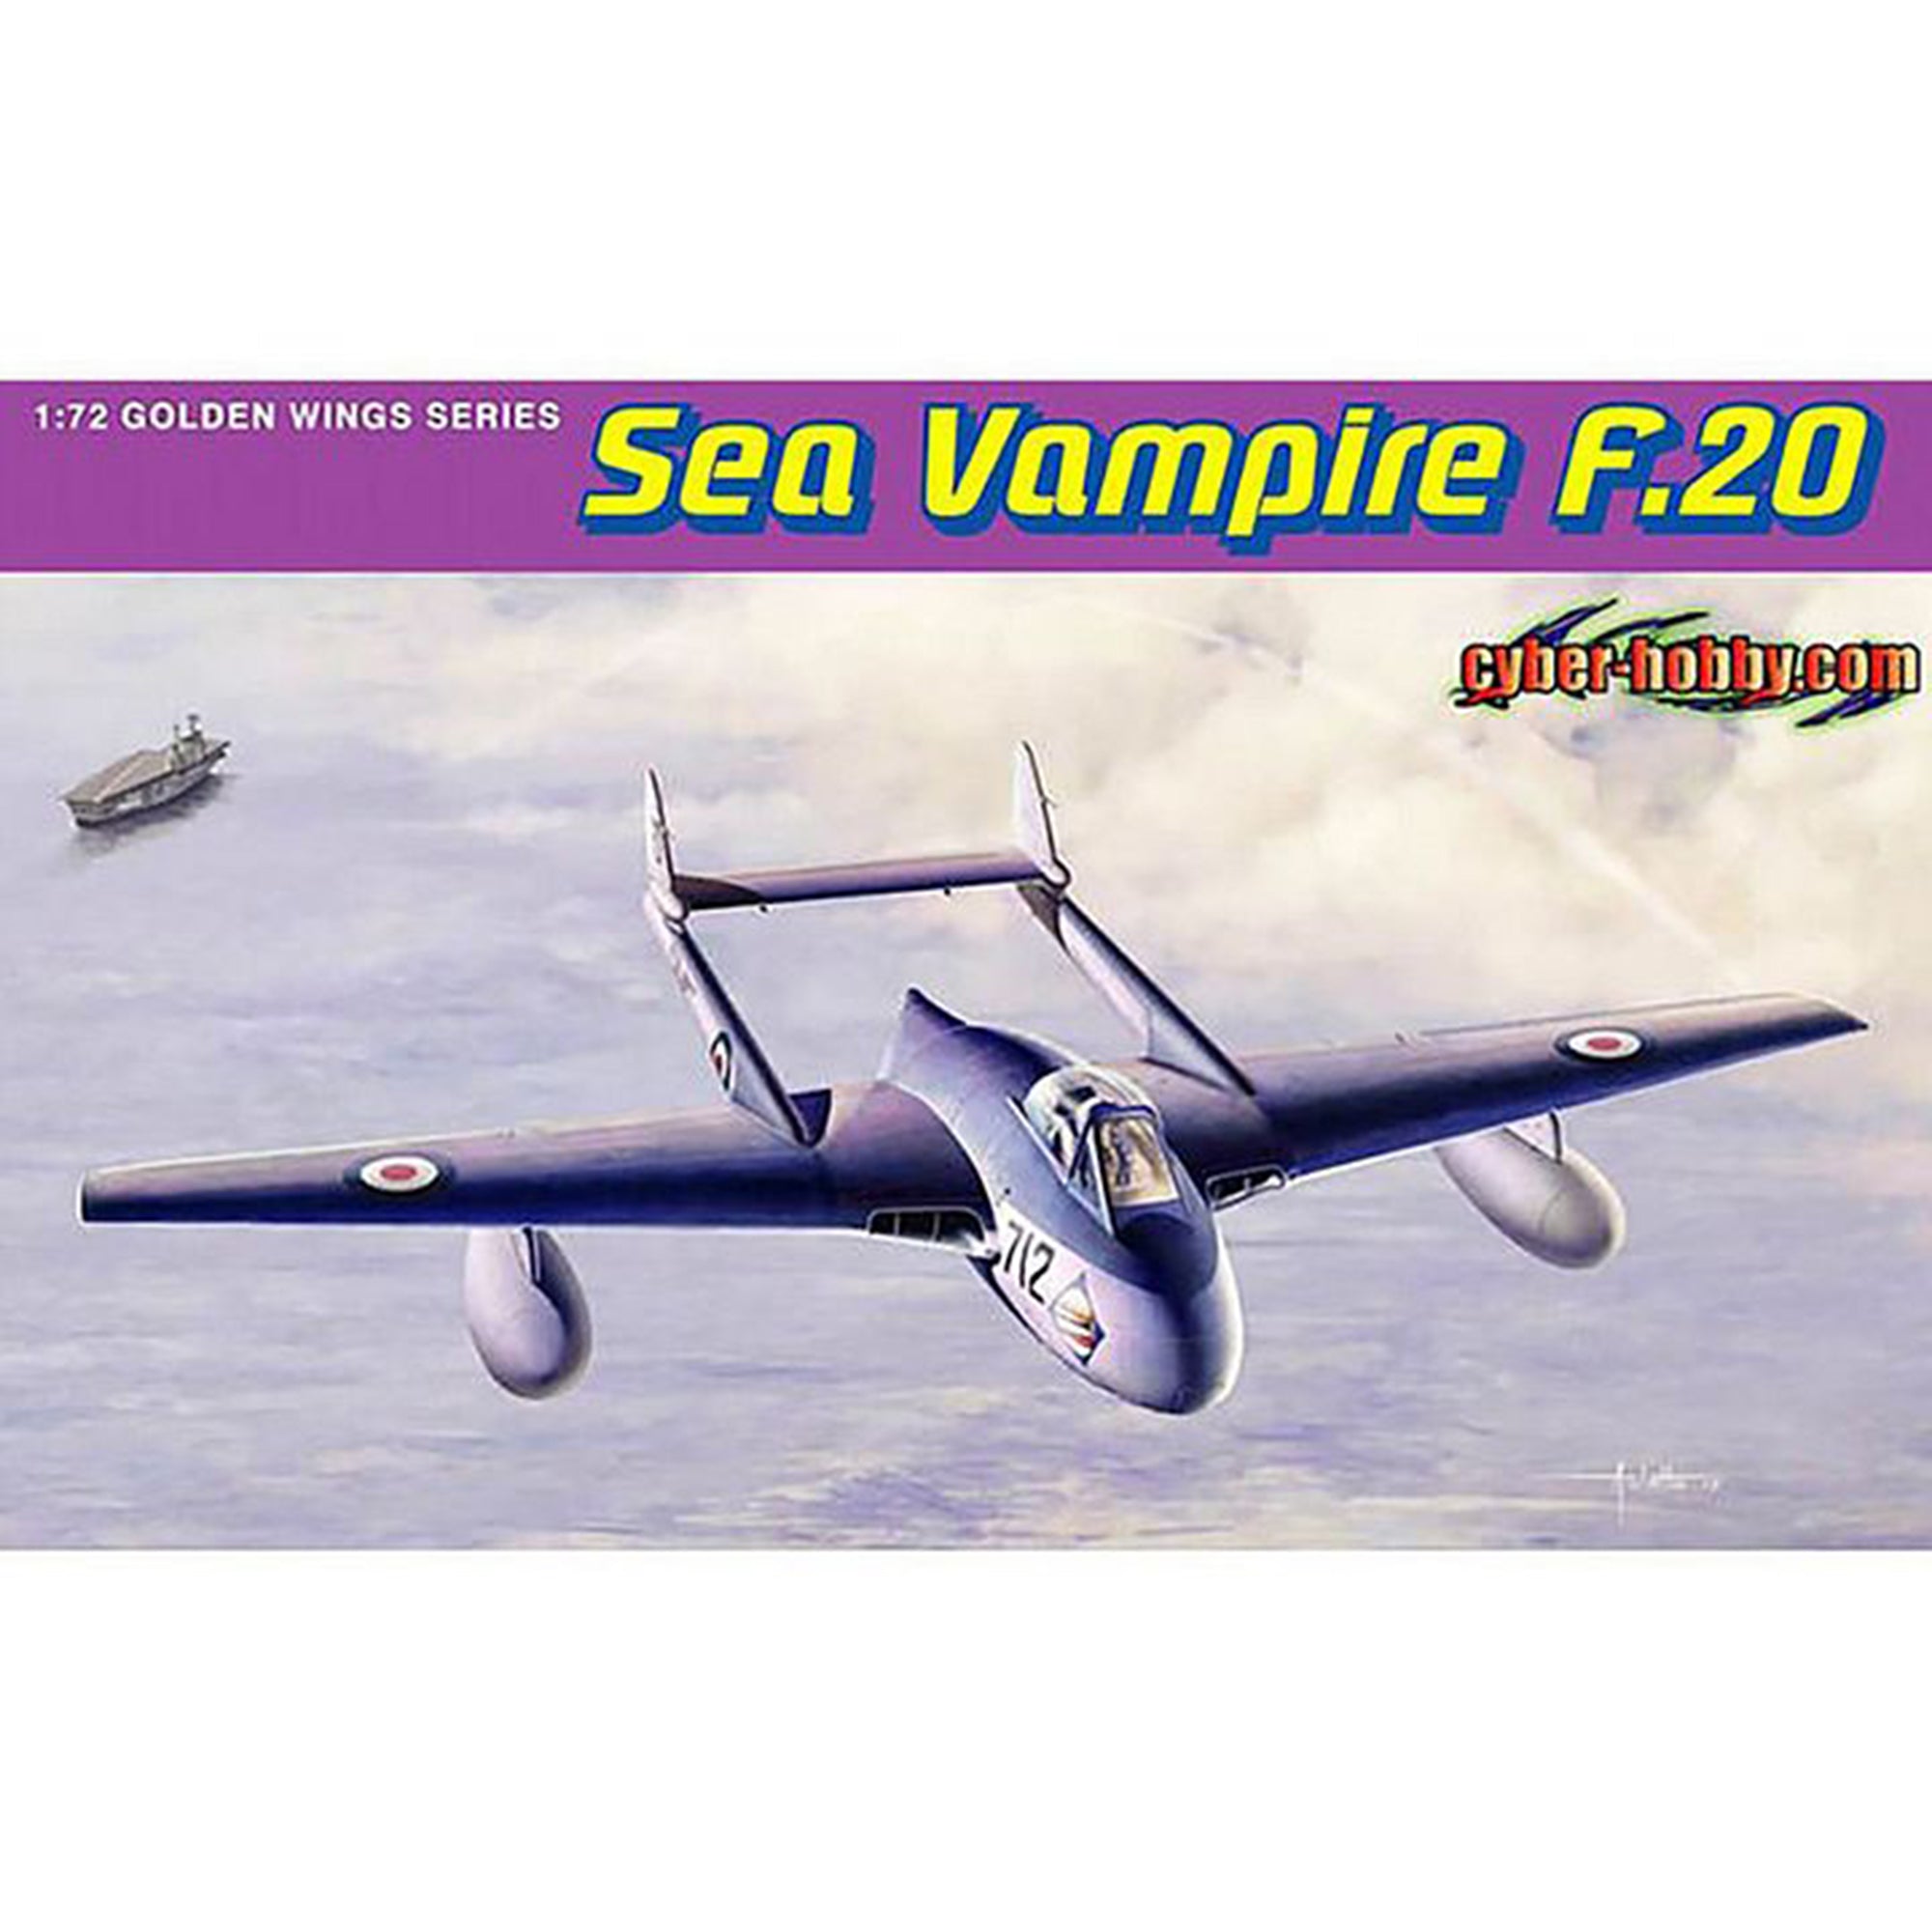 Dragon 5112 1/72 Sea Vampire F.20 Model Kit